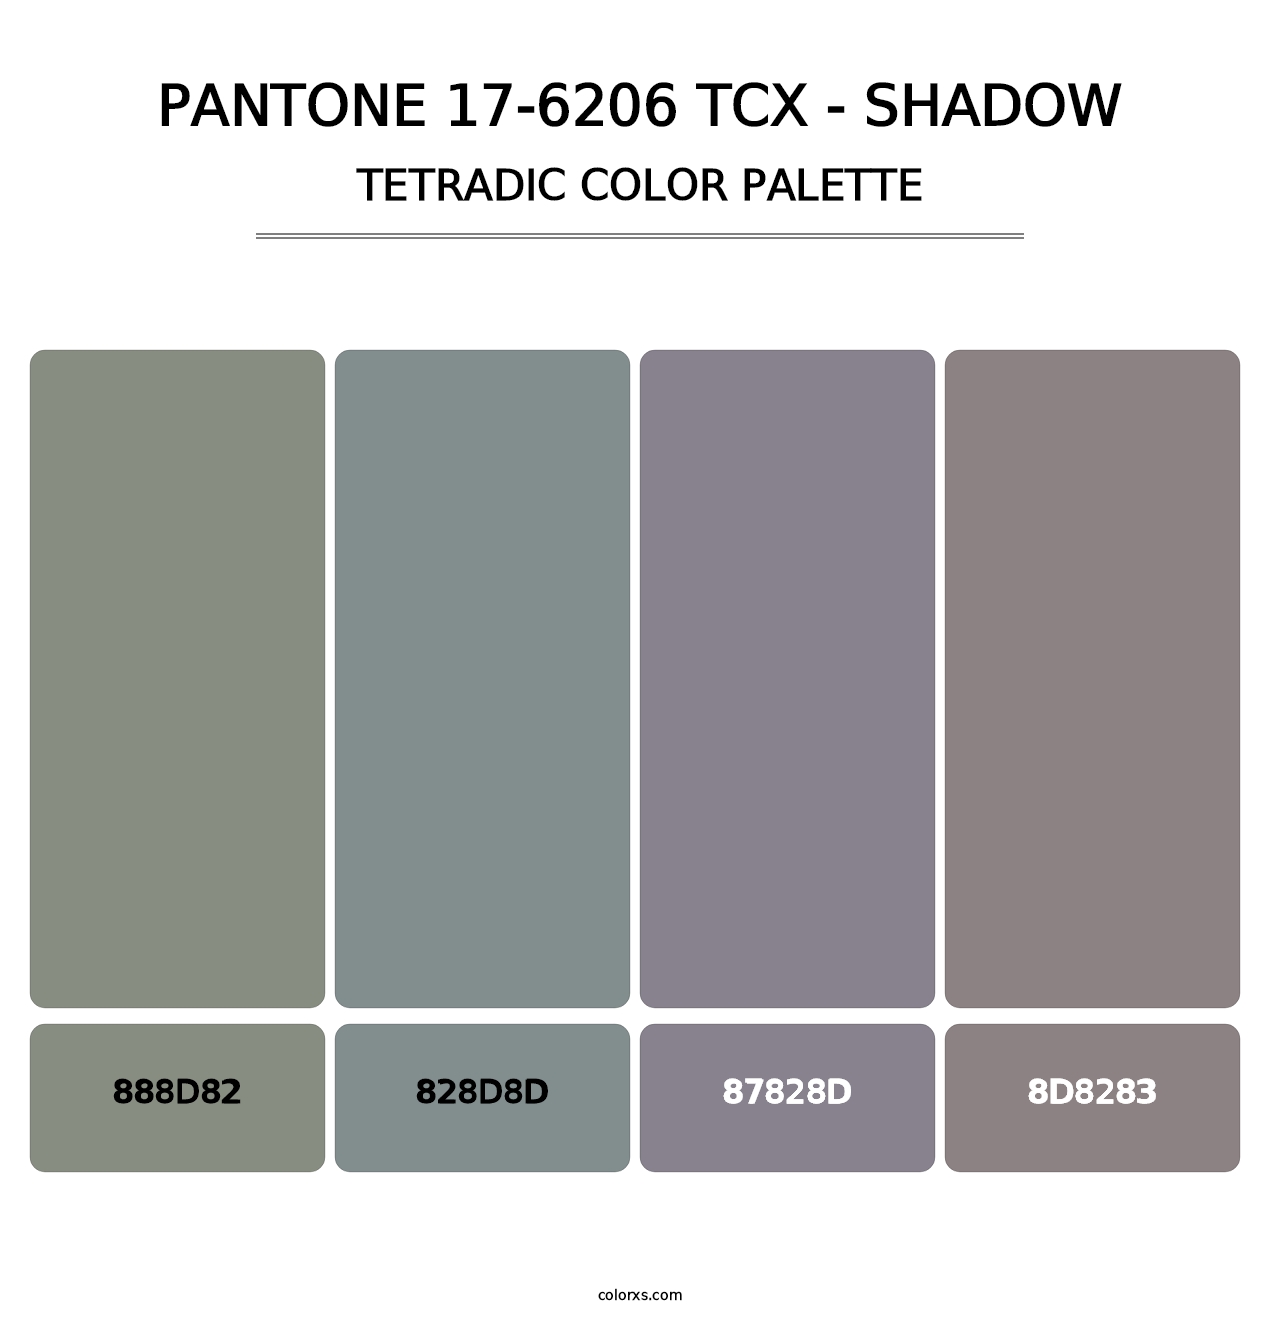 PANTONE 17-6206 TCX - Shadow - Tetradic Color Palette